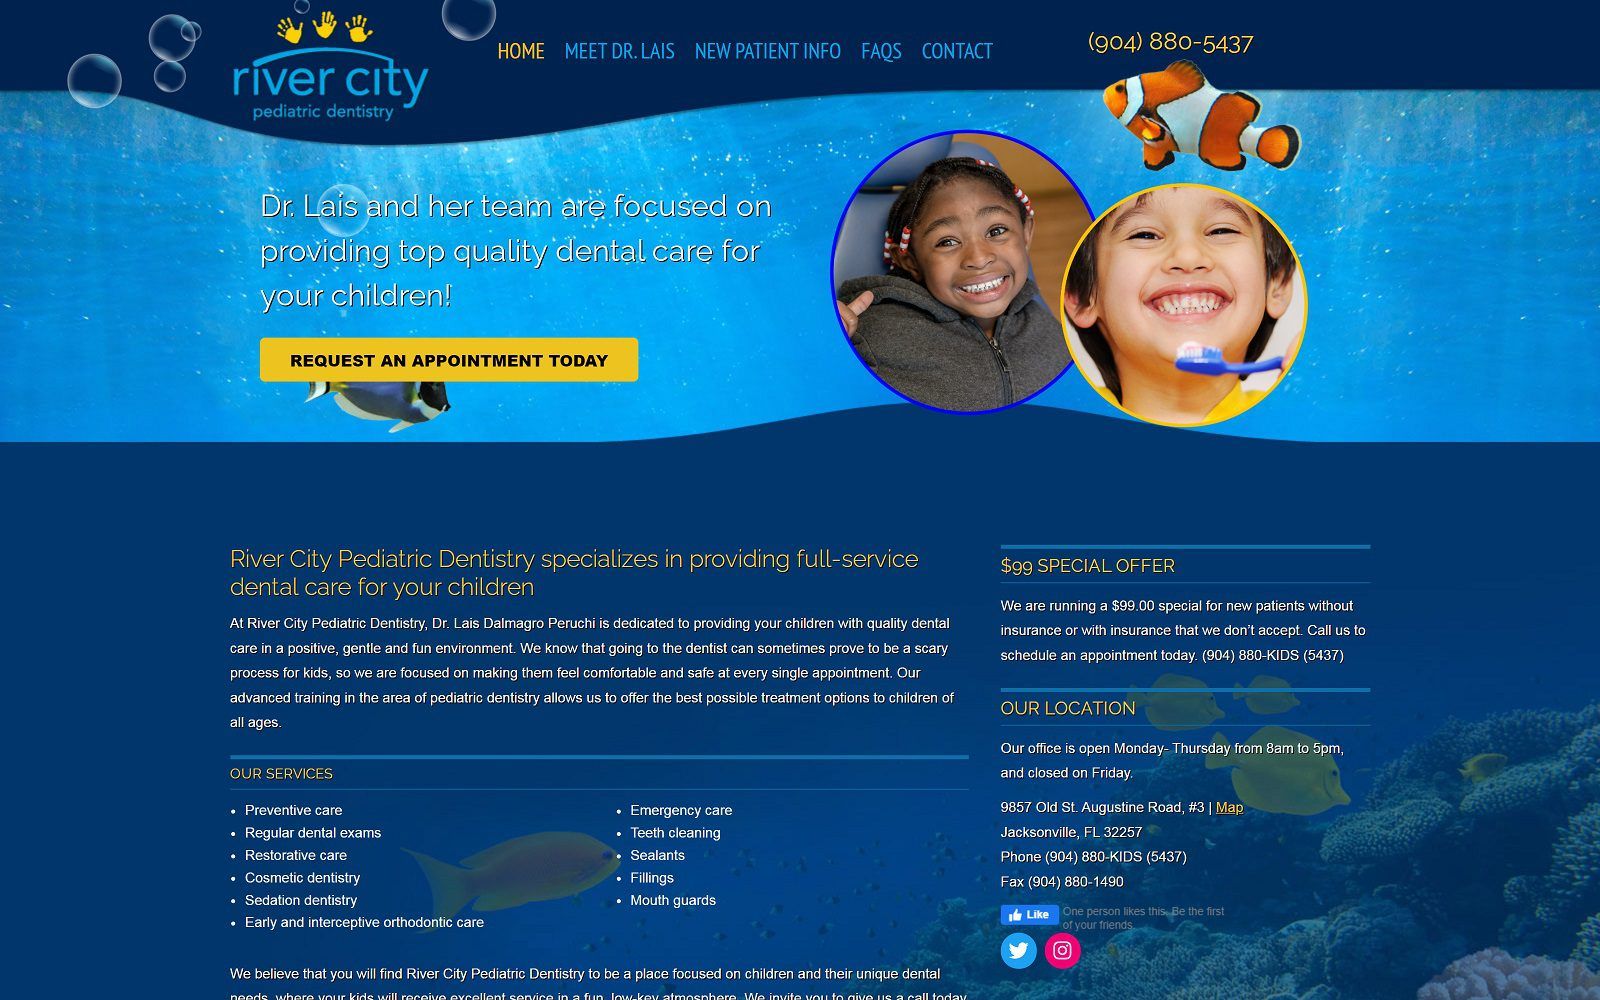 The screenshot of river city pediatric dentistry dr. Lais dalmagro peruchi website